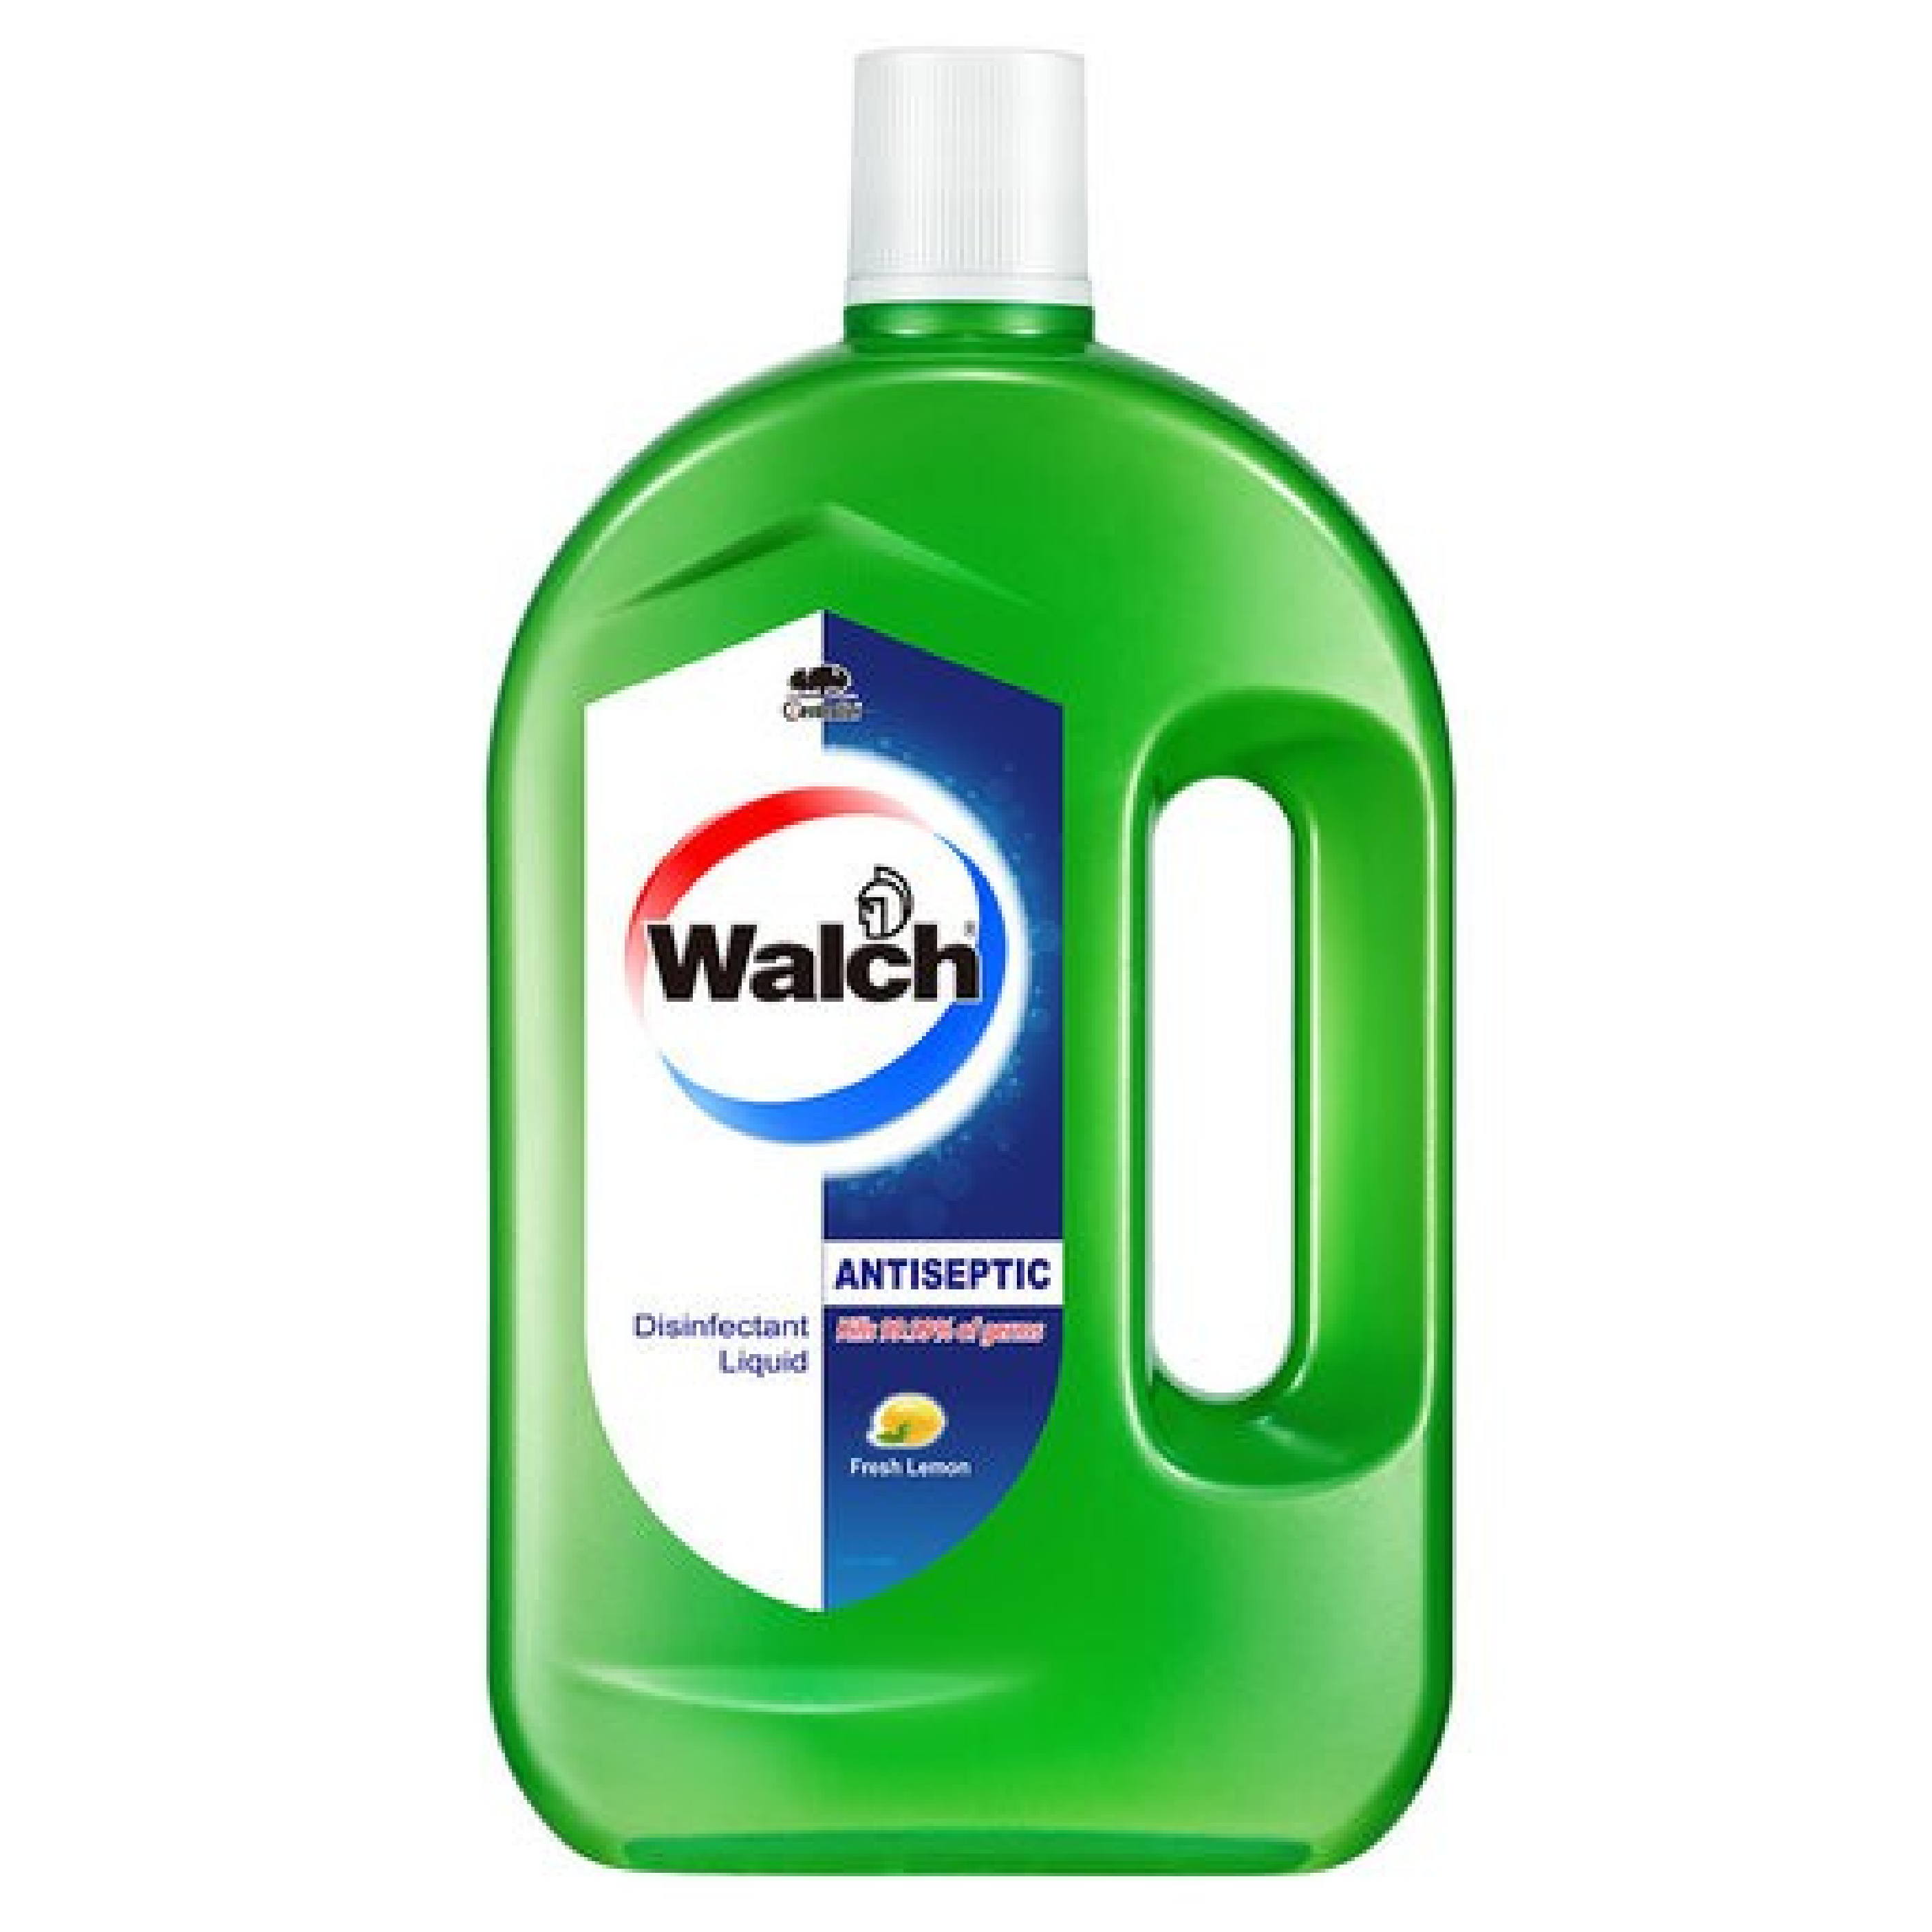 Walch ANTISEPTIC GERMICIDE Fresh Lemon Disinfectant Liquid 1L